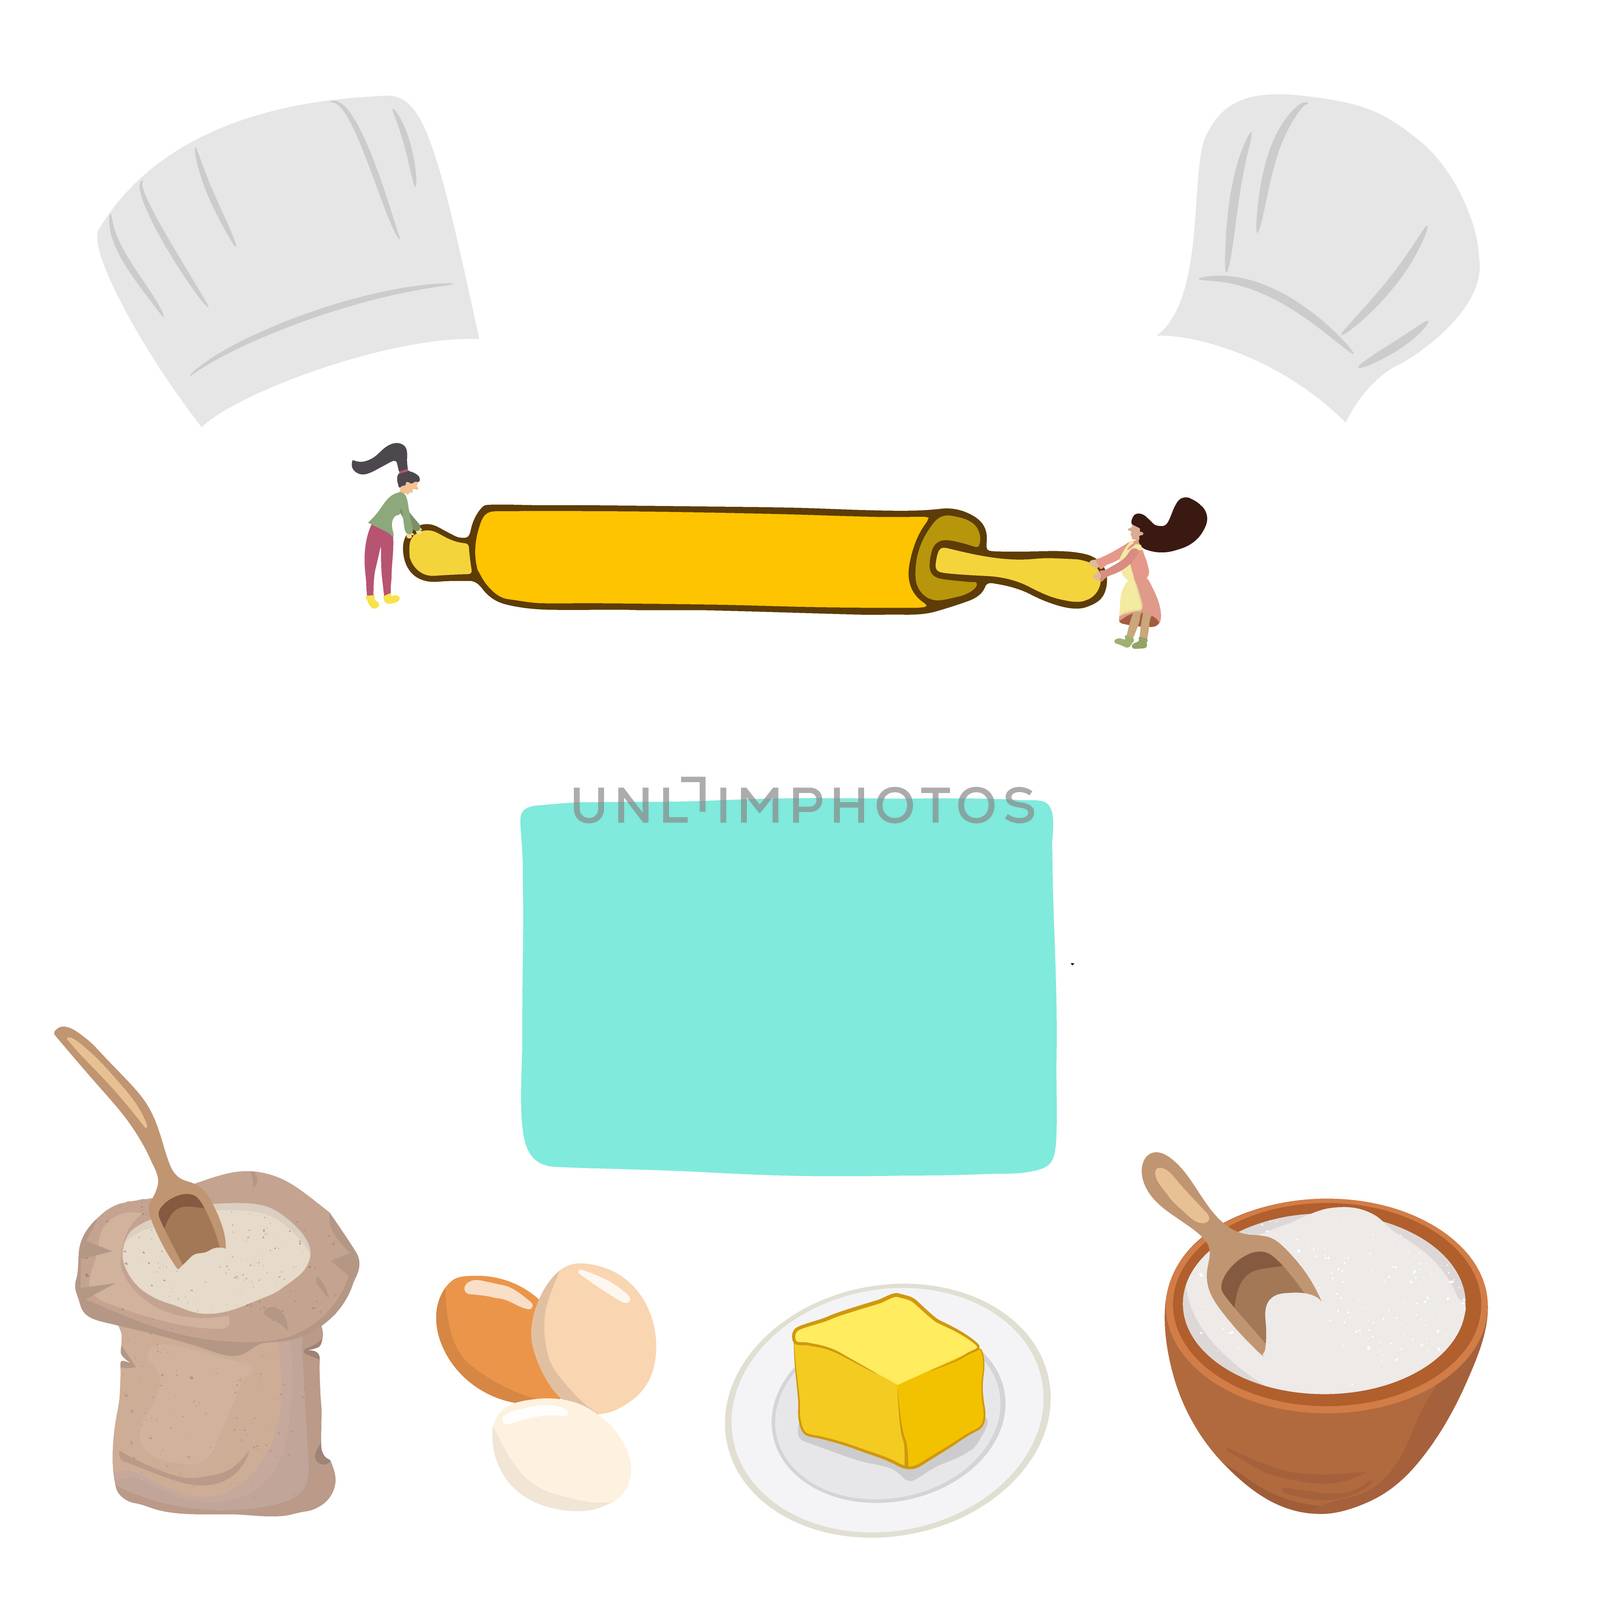 Tiny cute chefs preparing foor, Flour sack, sugar bowl, butter portion and three eggs illustration. 